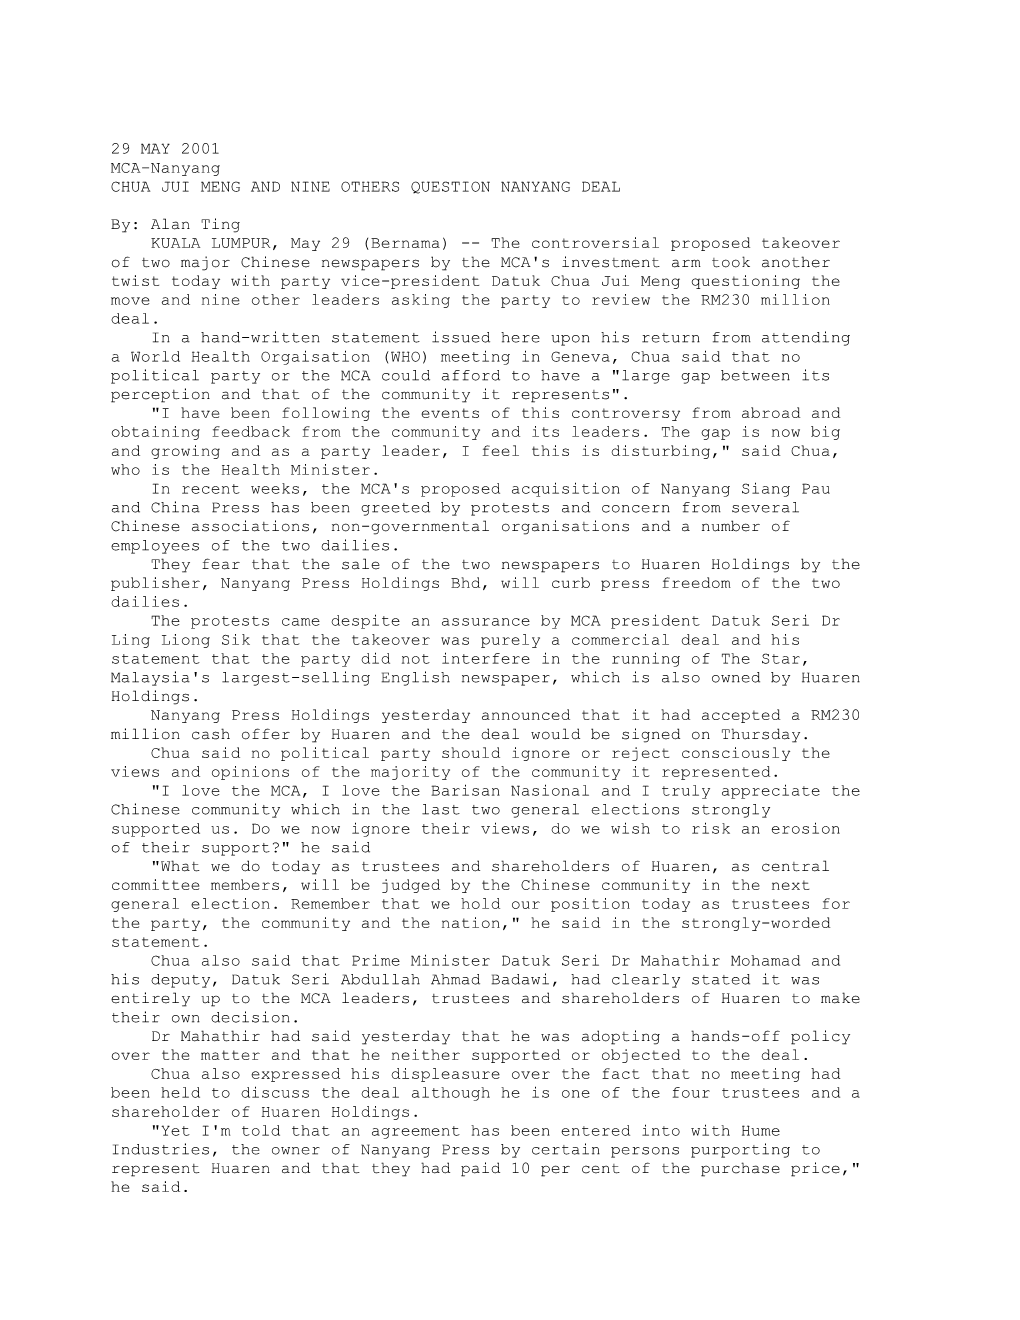 CHUA JUI MENG and NINE OTHERS QUESTION NANYANG DEAL (Bernama 29/05/2001)